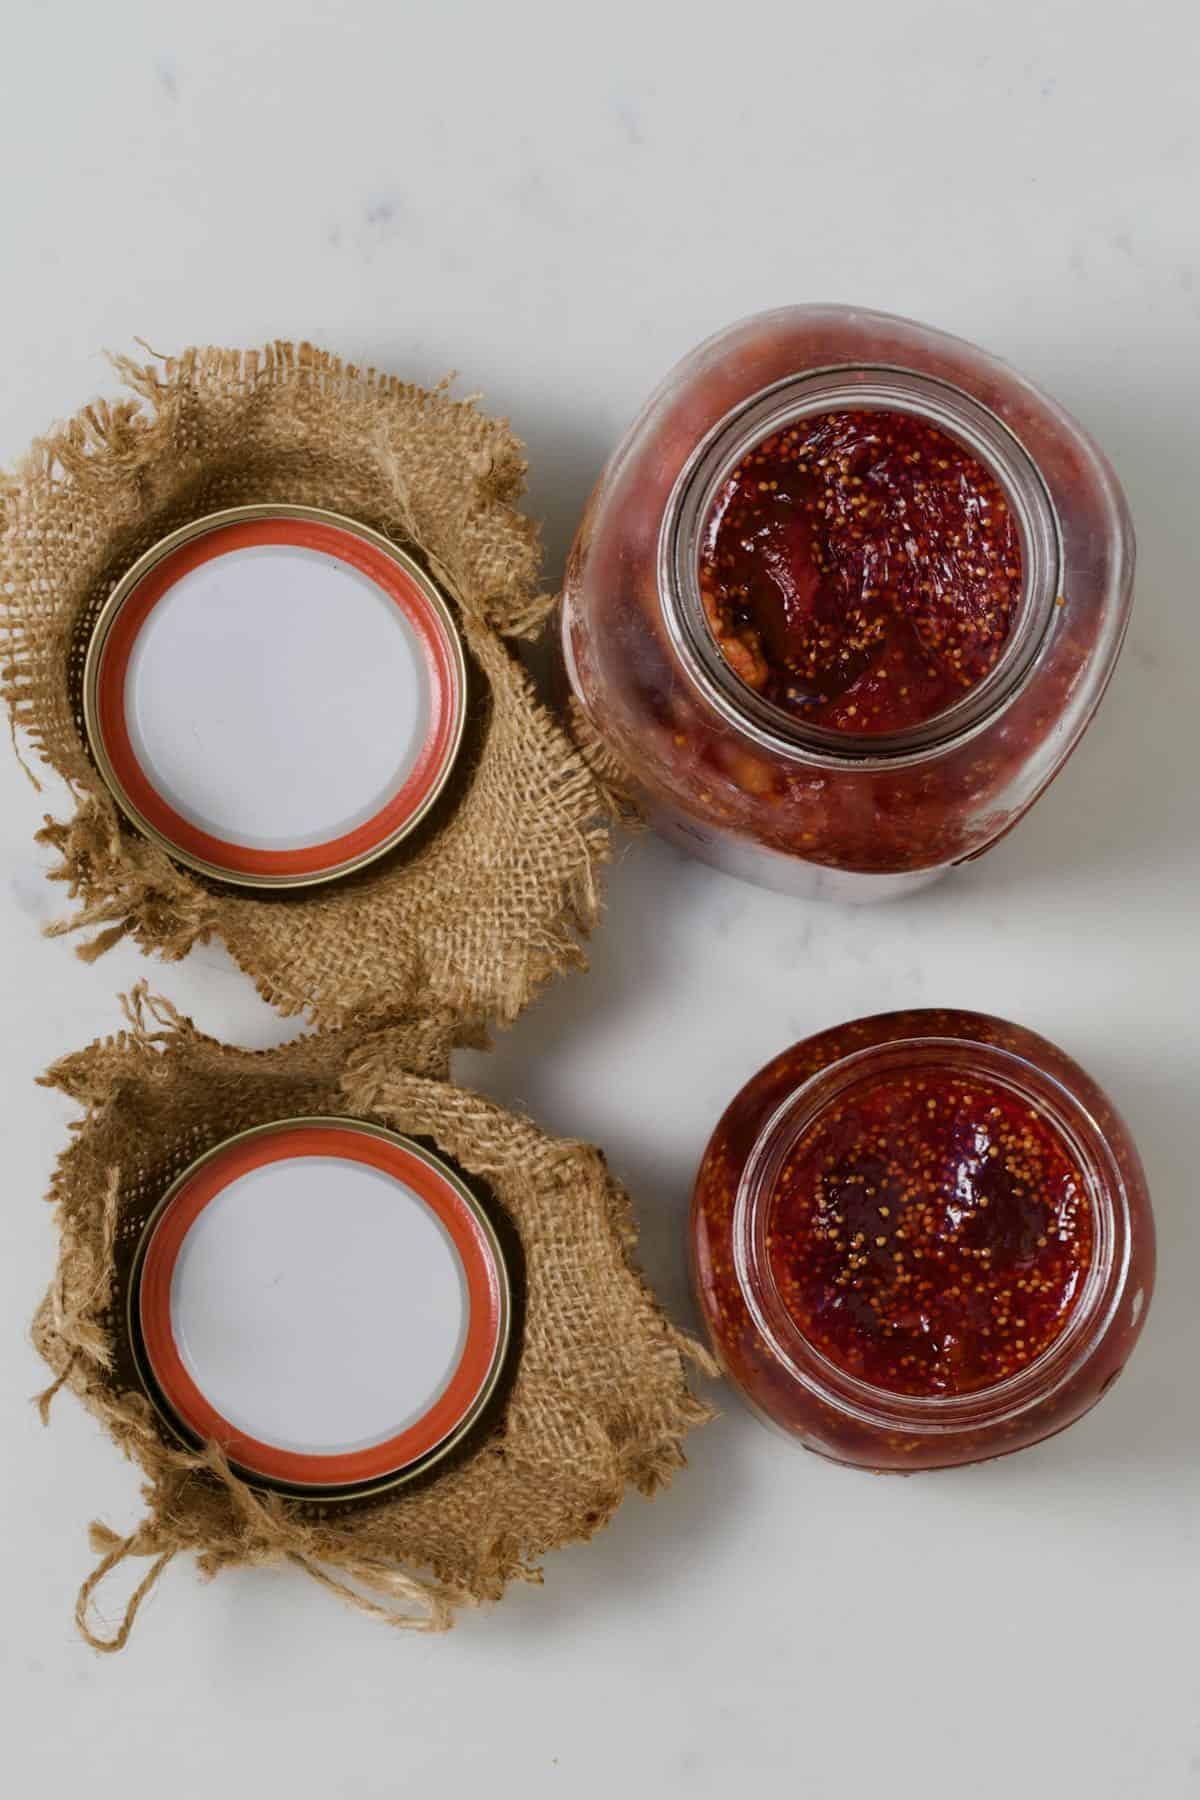 Homemade fig jam in jars